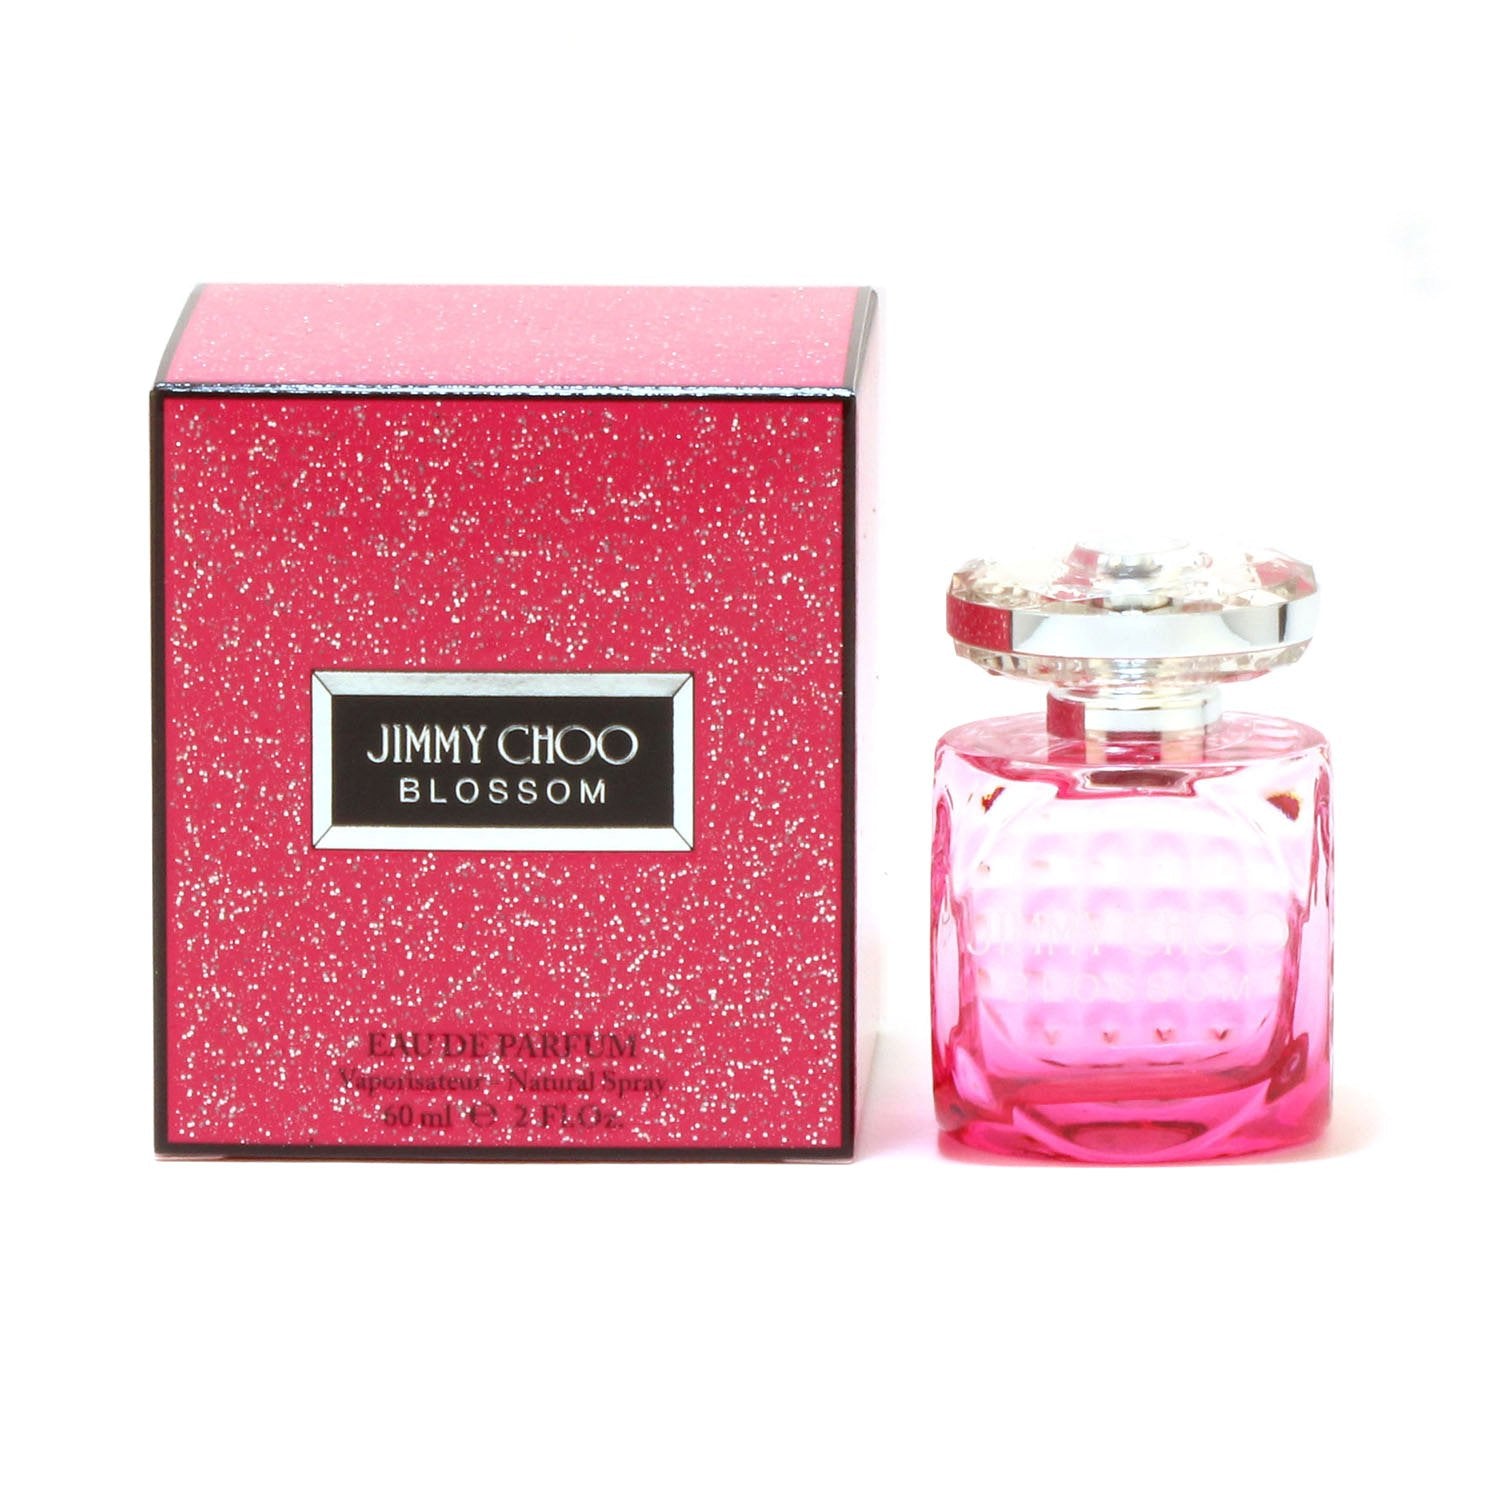 Perfume - JIMMY CHOO BLOSSOM FOR WOMEN - EAU DE PARFUM SPRAY